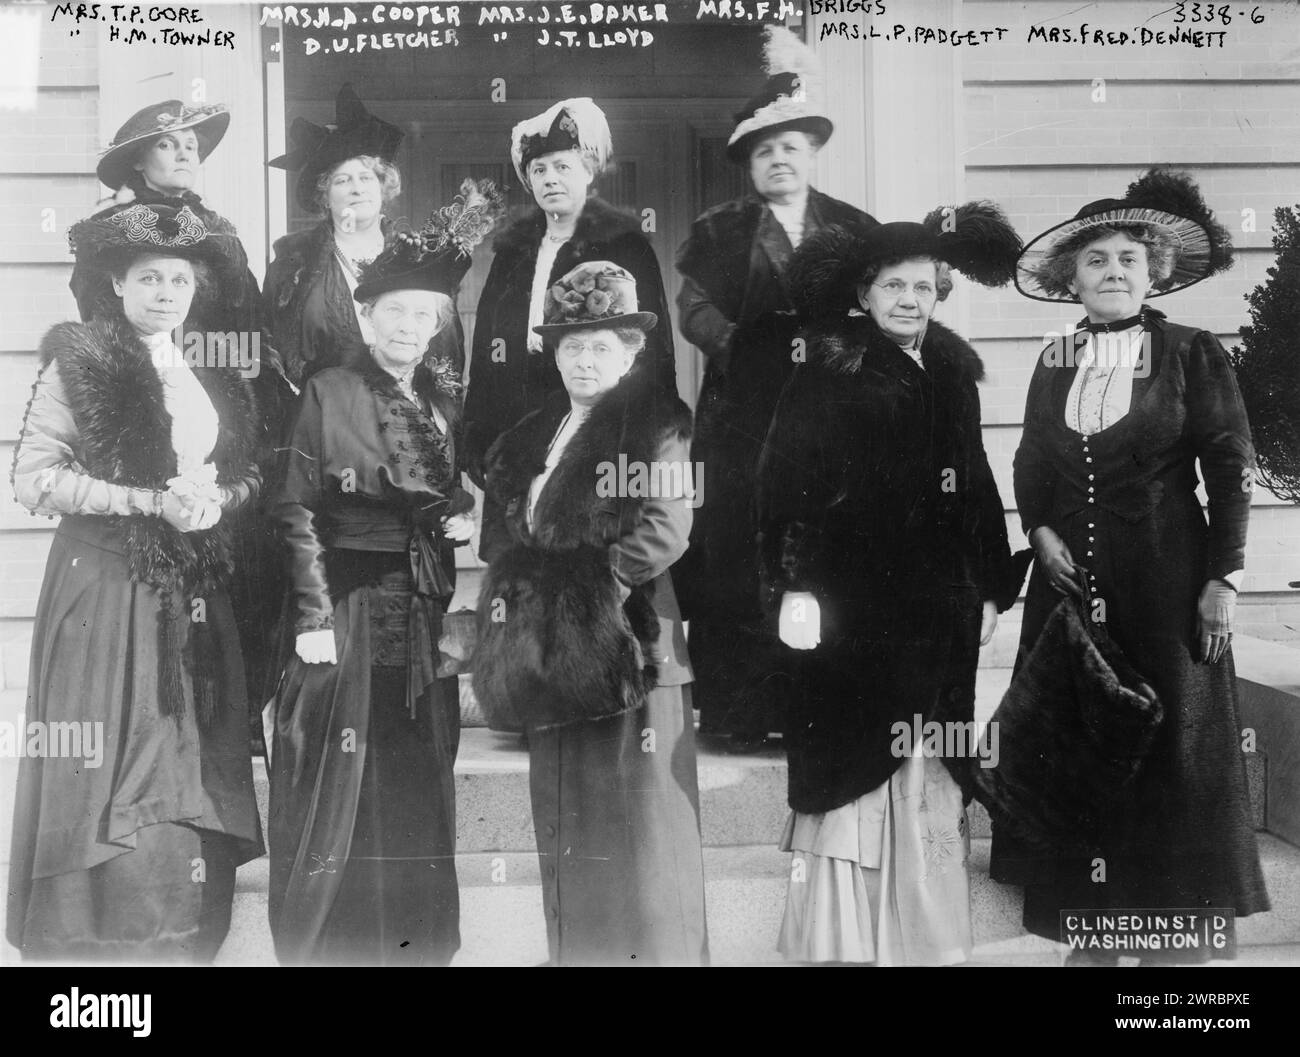 Mrs. T.P. Gore, Mrs. H.A. Cooper, Mrs. J.E. Baker i.e., Raker, Mrs. F.M. Briggs, Mrs. H.M. Towner, Mrs D.U. Fletcher, Mrs J.T. Lloyd. Mrs. L.P. Padgett, Mrs. Fred. Dennett, Photograph shows wives of congressmen in front of the Ladies Congressional Club of Washington, D.C. Depicted are President Mrs. Duncan U. Fletcher, Vice Presidents Mrs. Frank H. Briggs, Mrs. Henry A. Cooper, Mrs. Thomas P. Gore, Mrs. James T. Lloyd and Mrs. Lemuel P. Padgett; recording secretary Mrs. Horace M. Towner, corresponding secretary Mrs. John E. Raker and Treasurer Mrs. Fred Dennett., 1915, Glass negatives Stock Photo